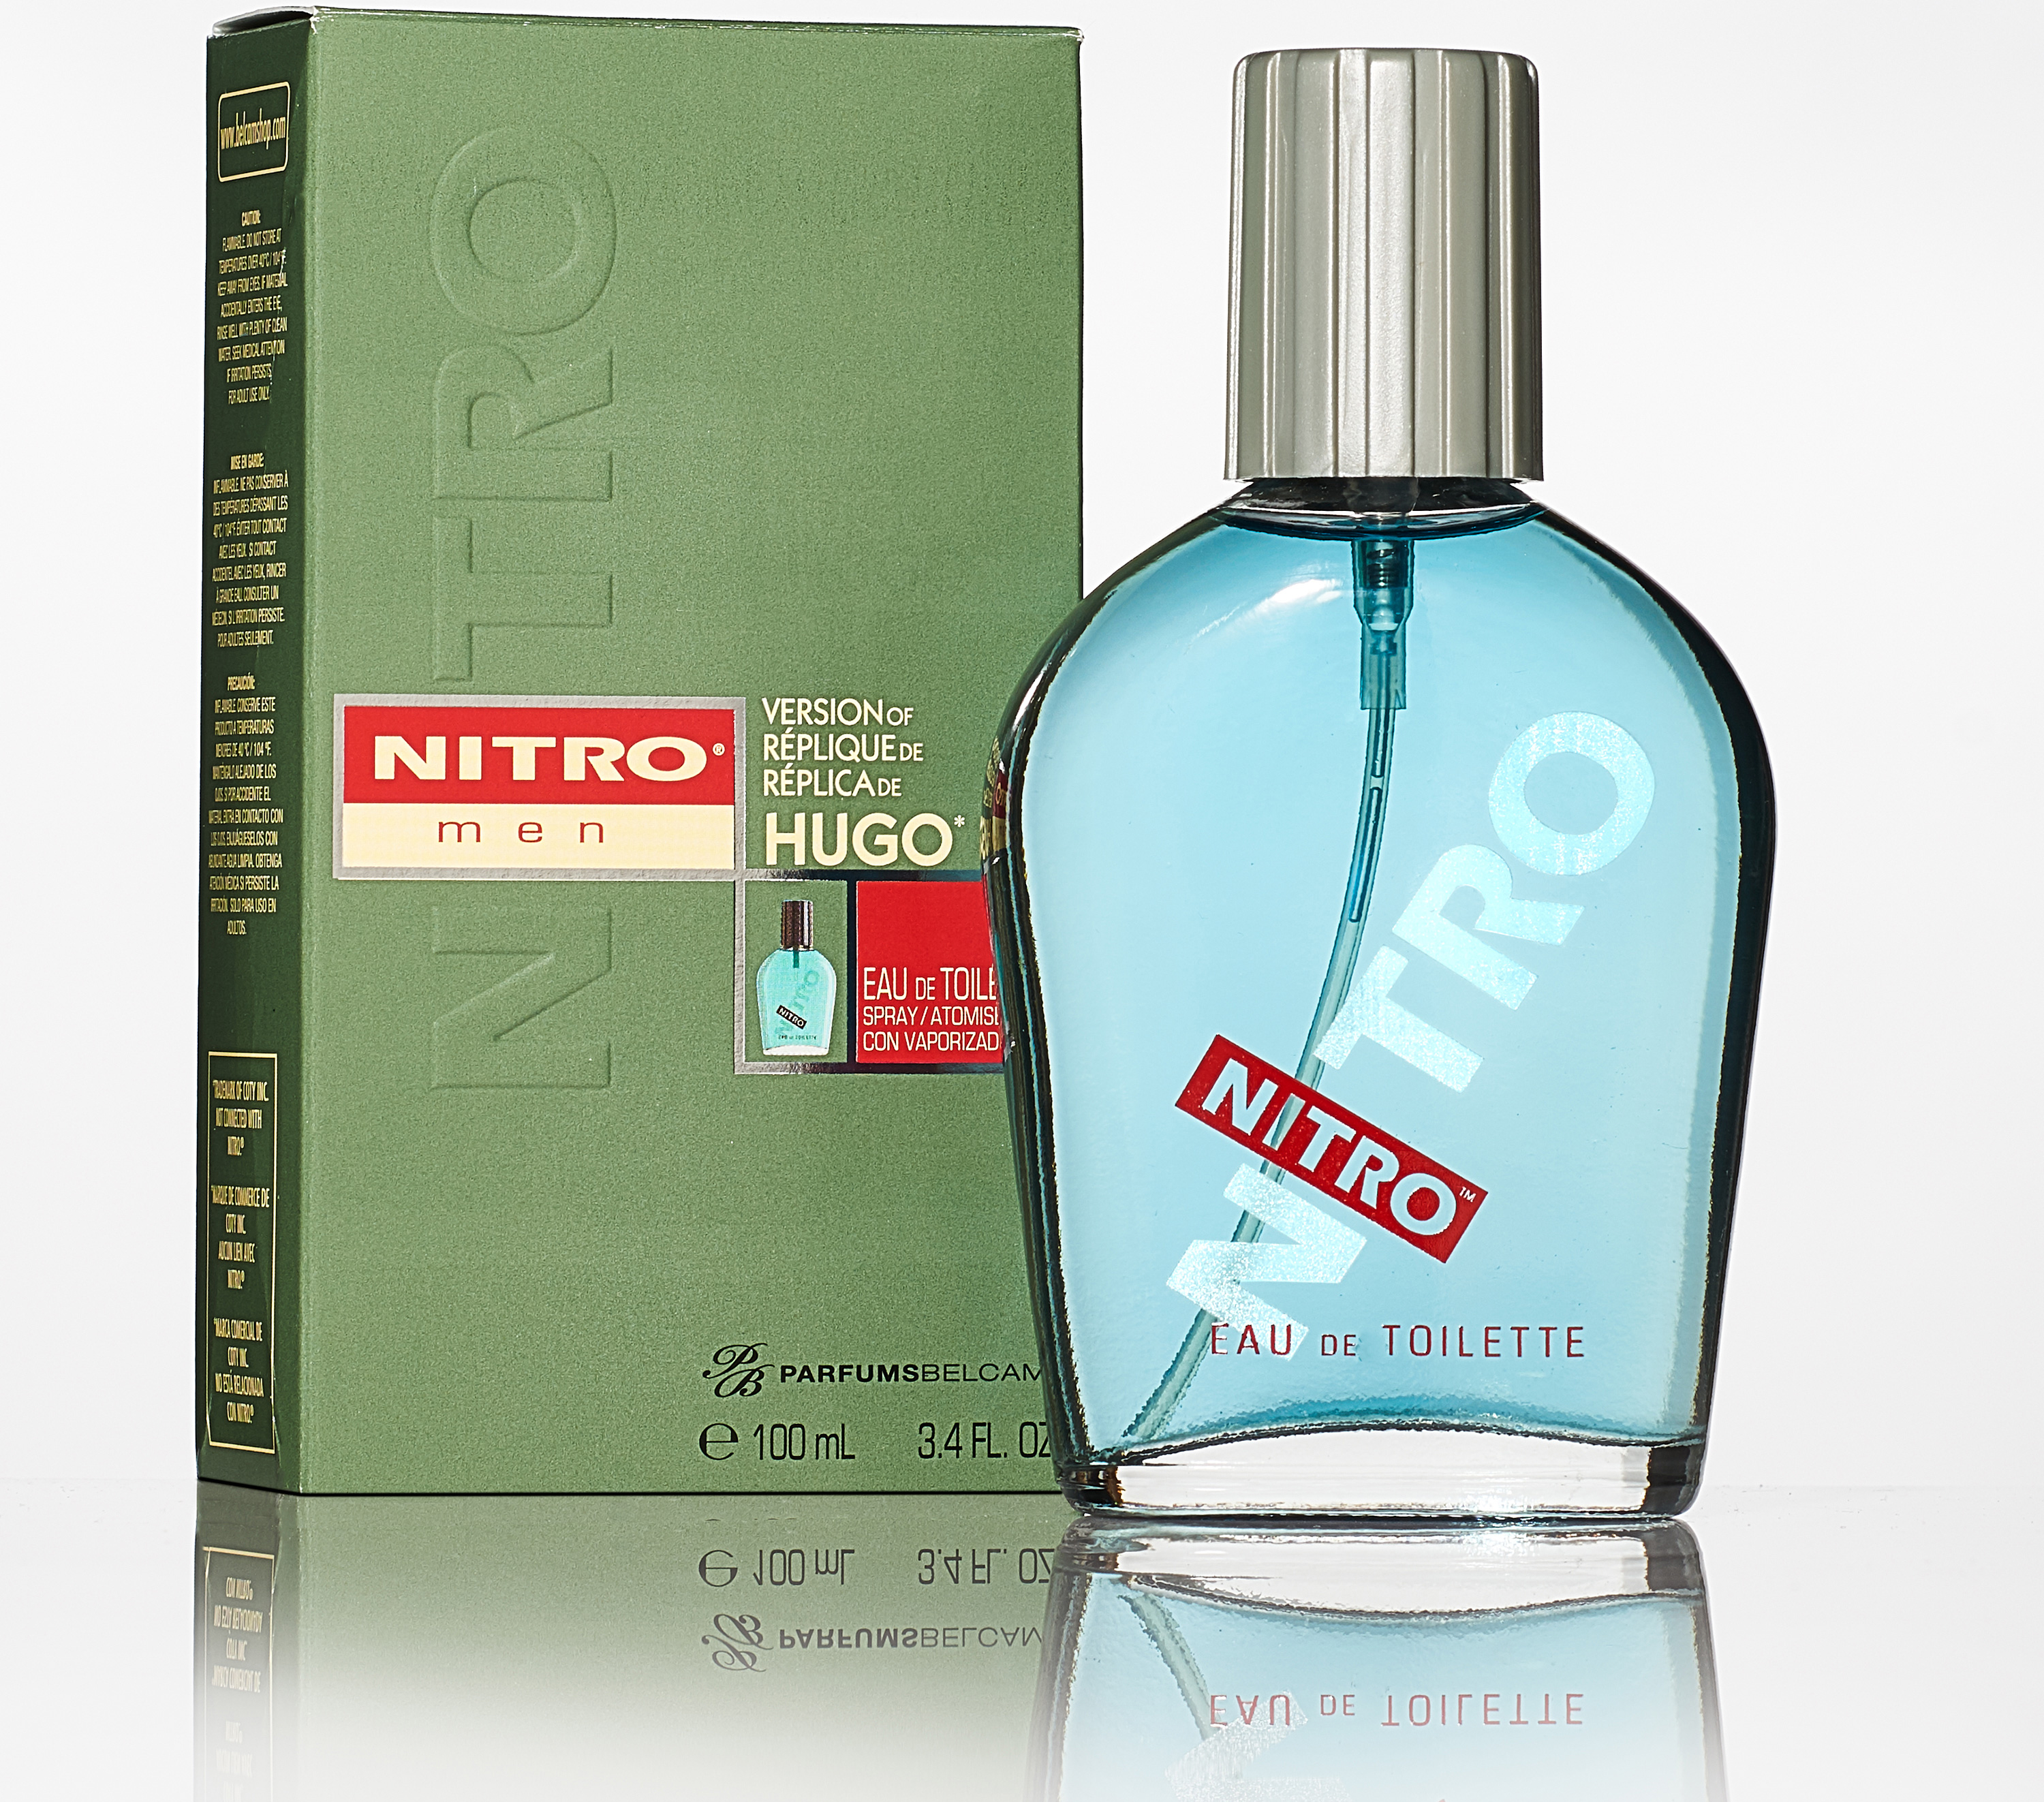 PB ParfumsBelcam Nitro version of Hugo, Eau De Toilette, Cologne for Men, 3.4 Fl oz - image 4 of 7